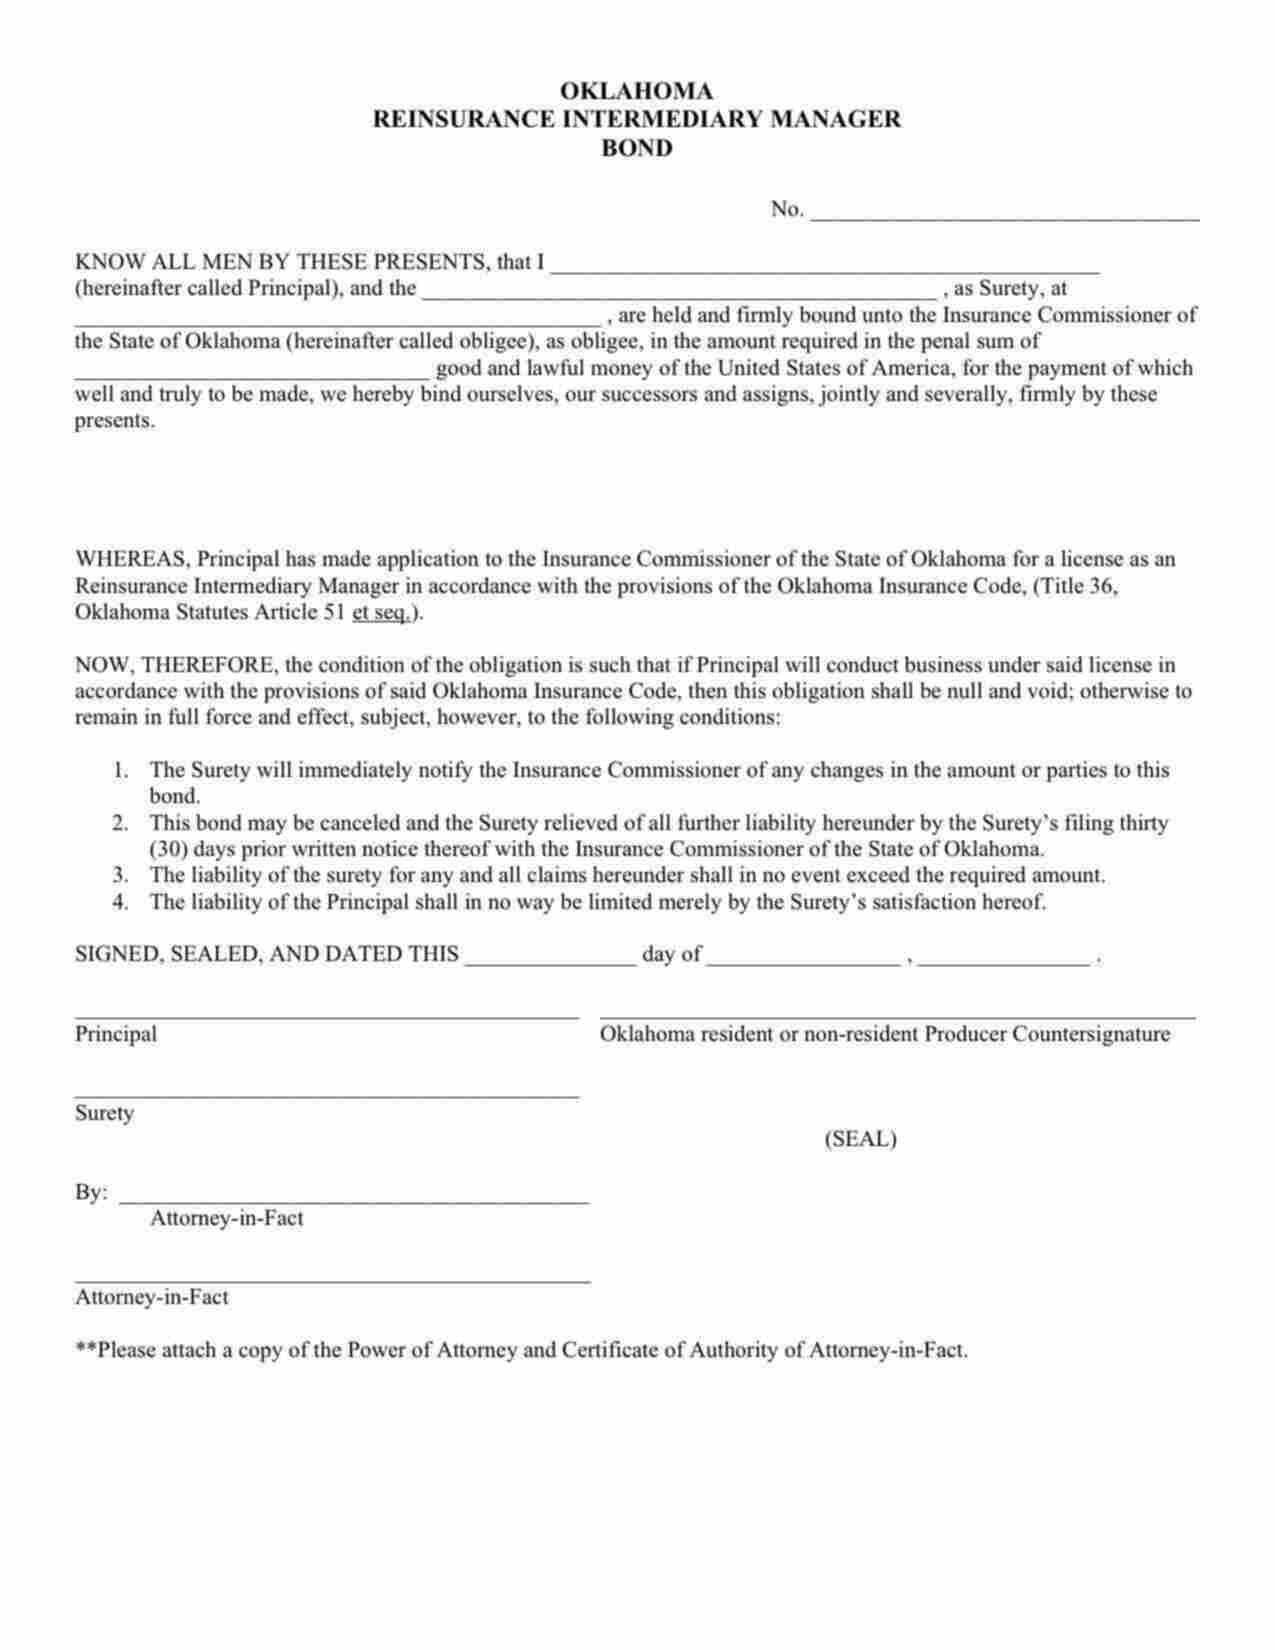 Oklahoma Reinsurance Intermediary Manager Bond Form